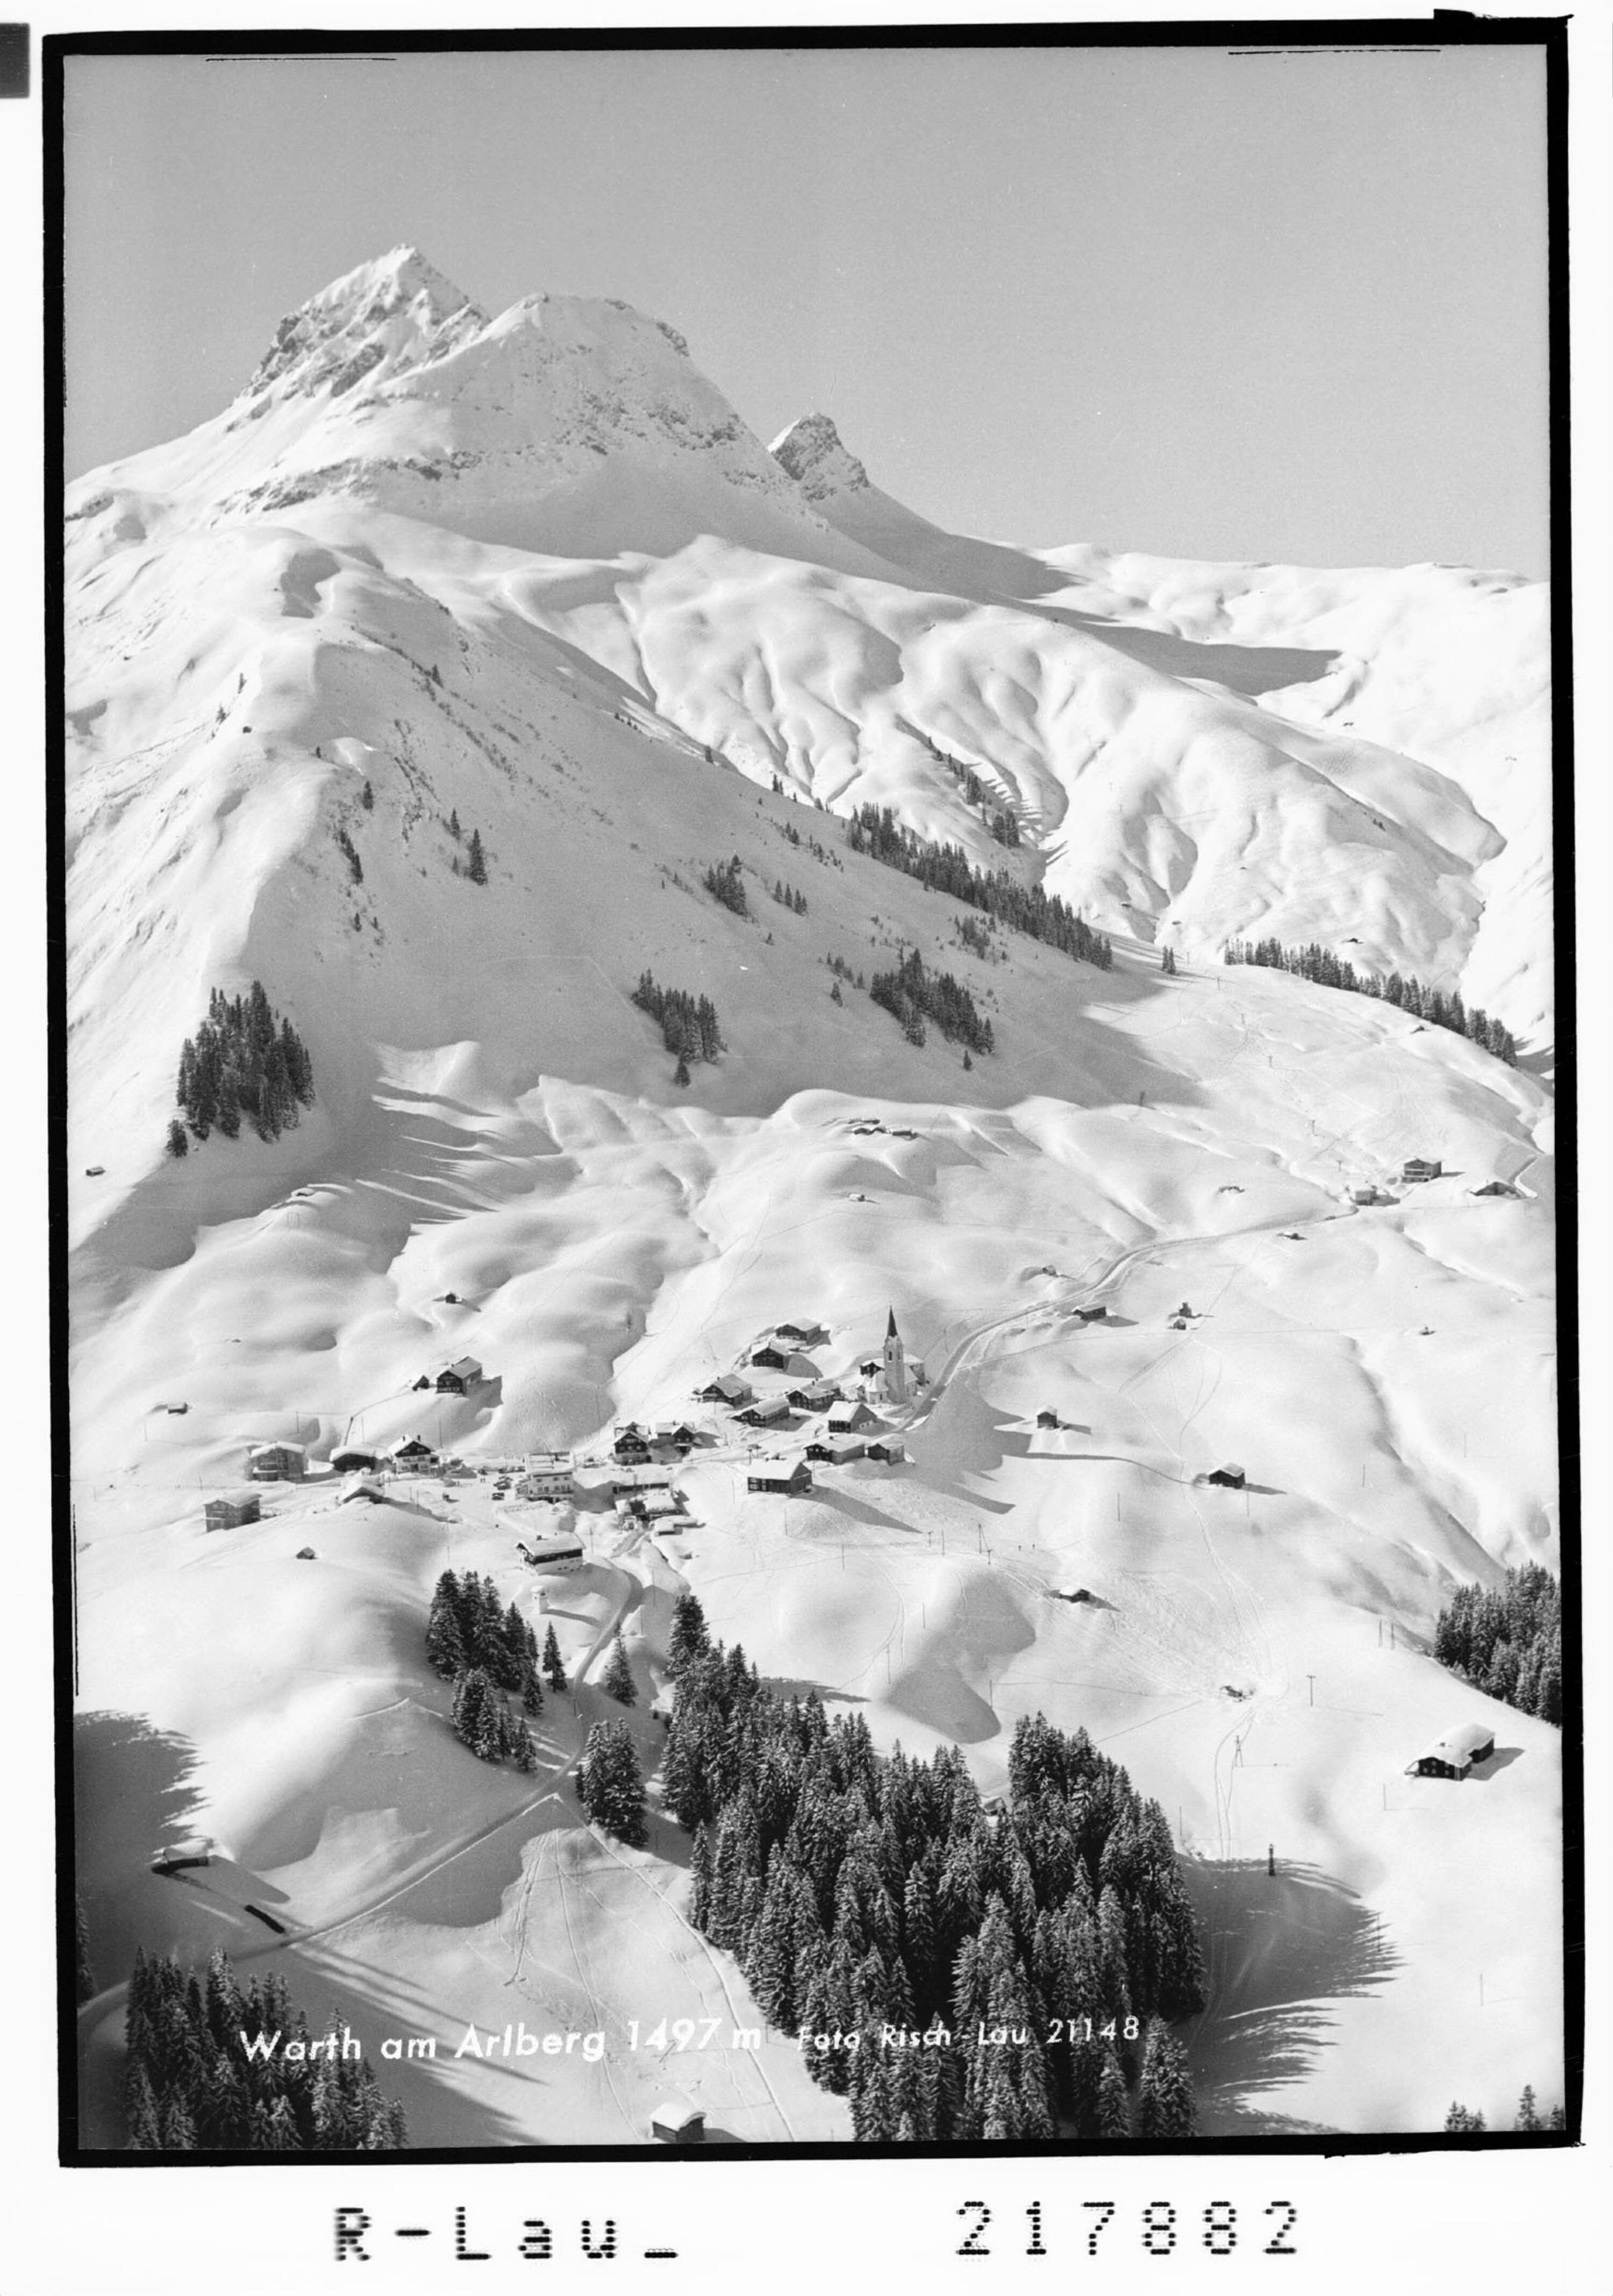 Warth am Arlberg 1497 m></div>


    <hr>
    <div class=